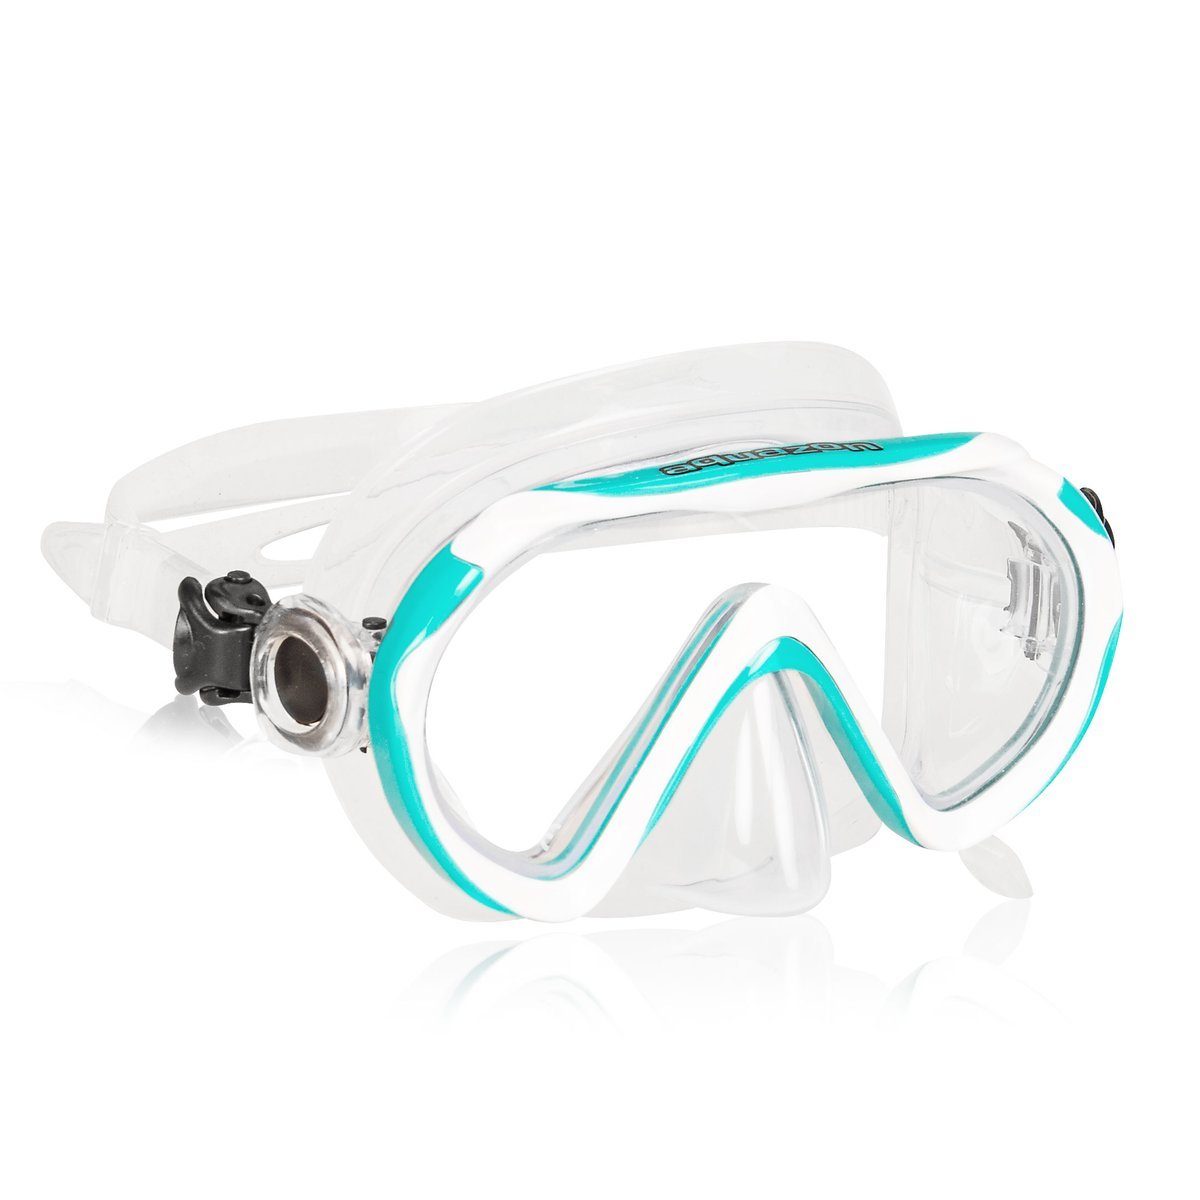 AQUAZON Taucherbrille »AQUAZON BEACH Schnorchelbrille, Schwimmbrille,  Taucherbrille für Kinder und Erwachsene, Tempered Glas, hochwertiges  Silikon«